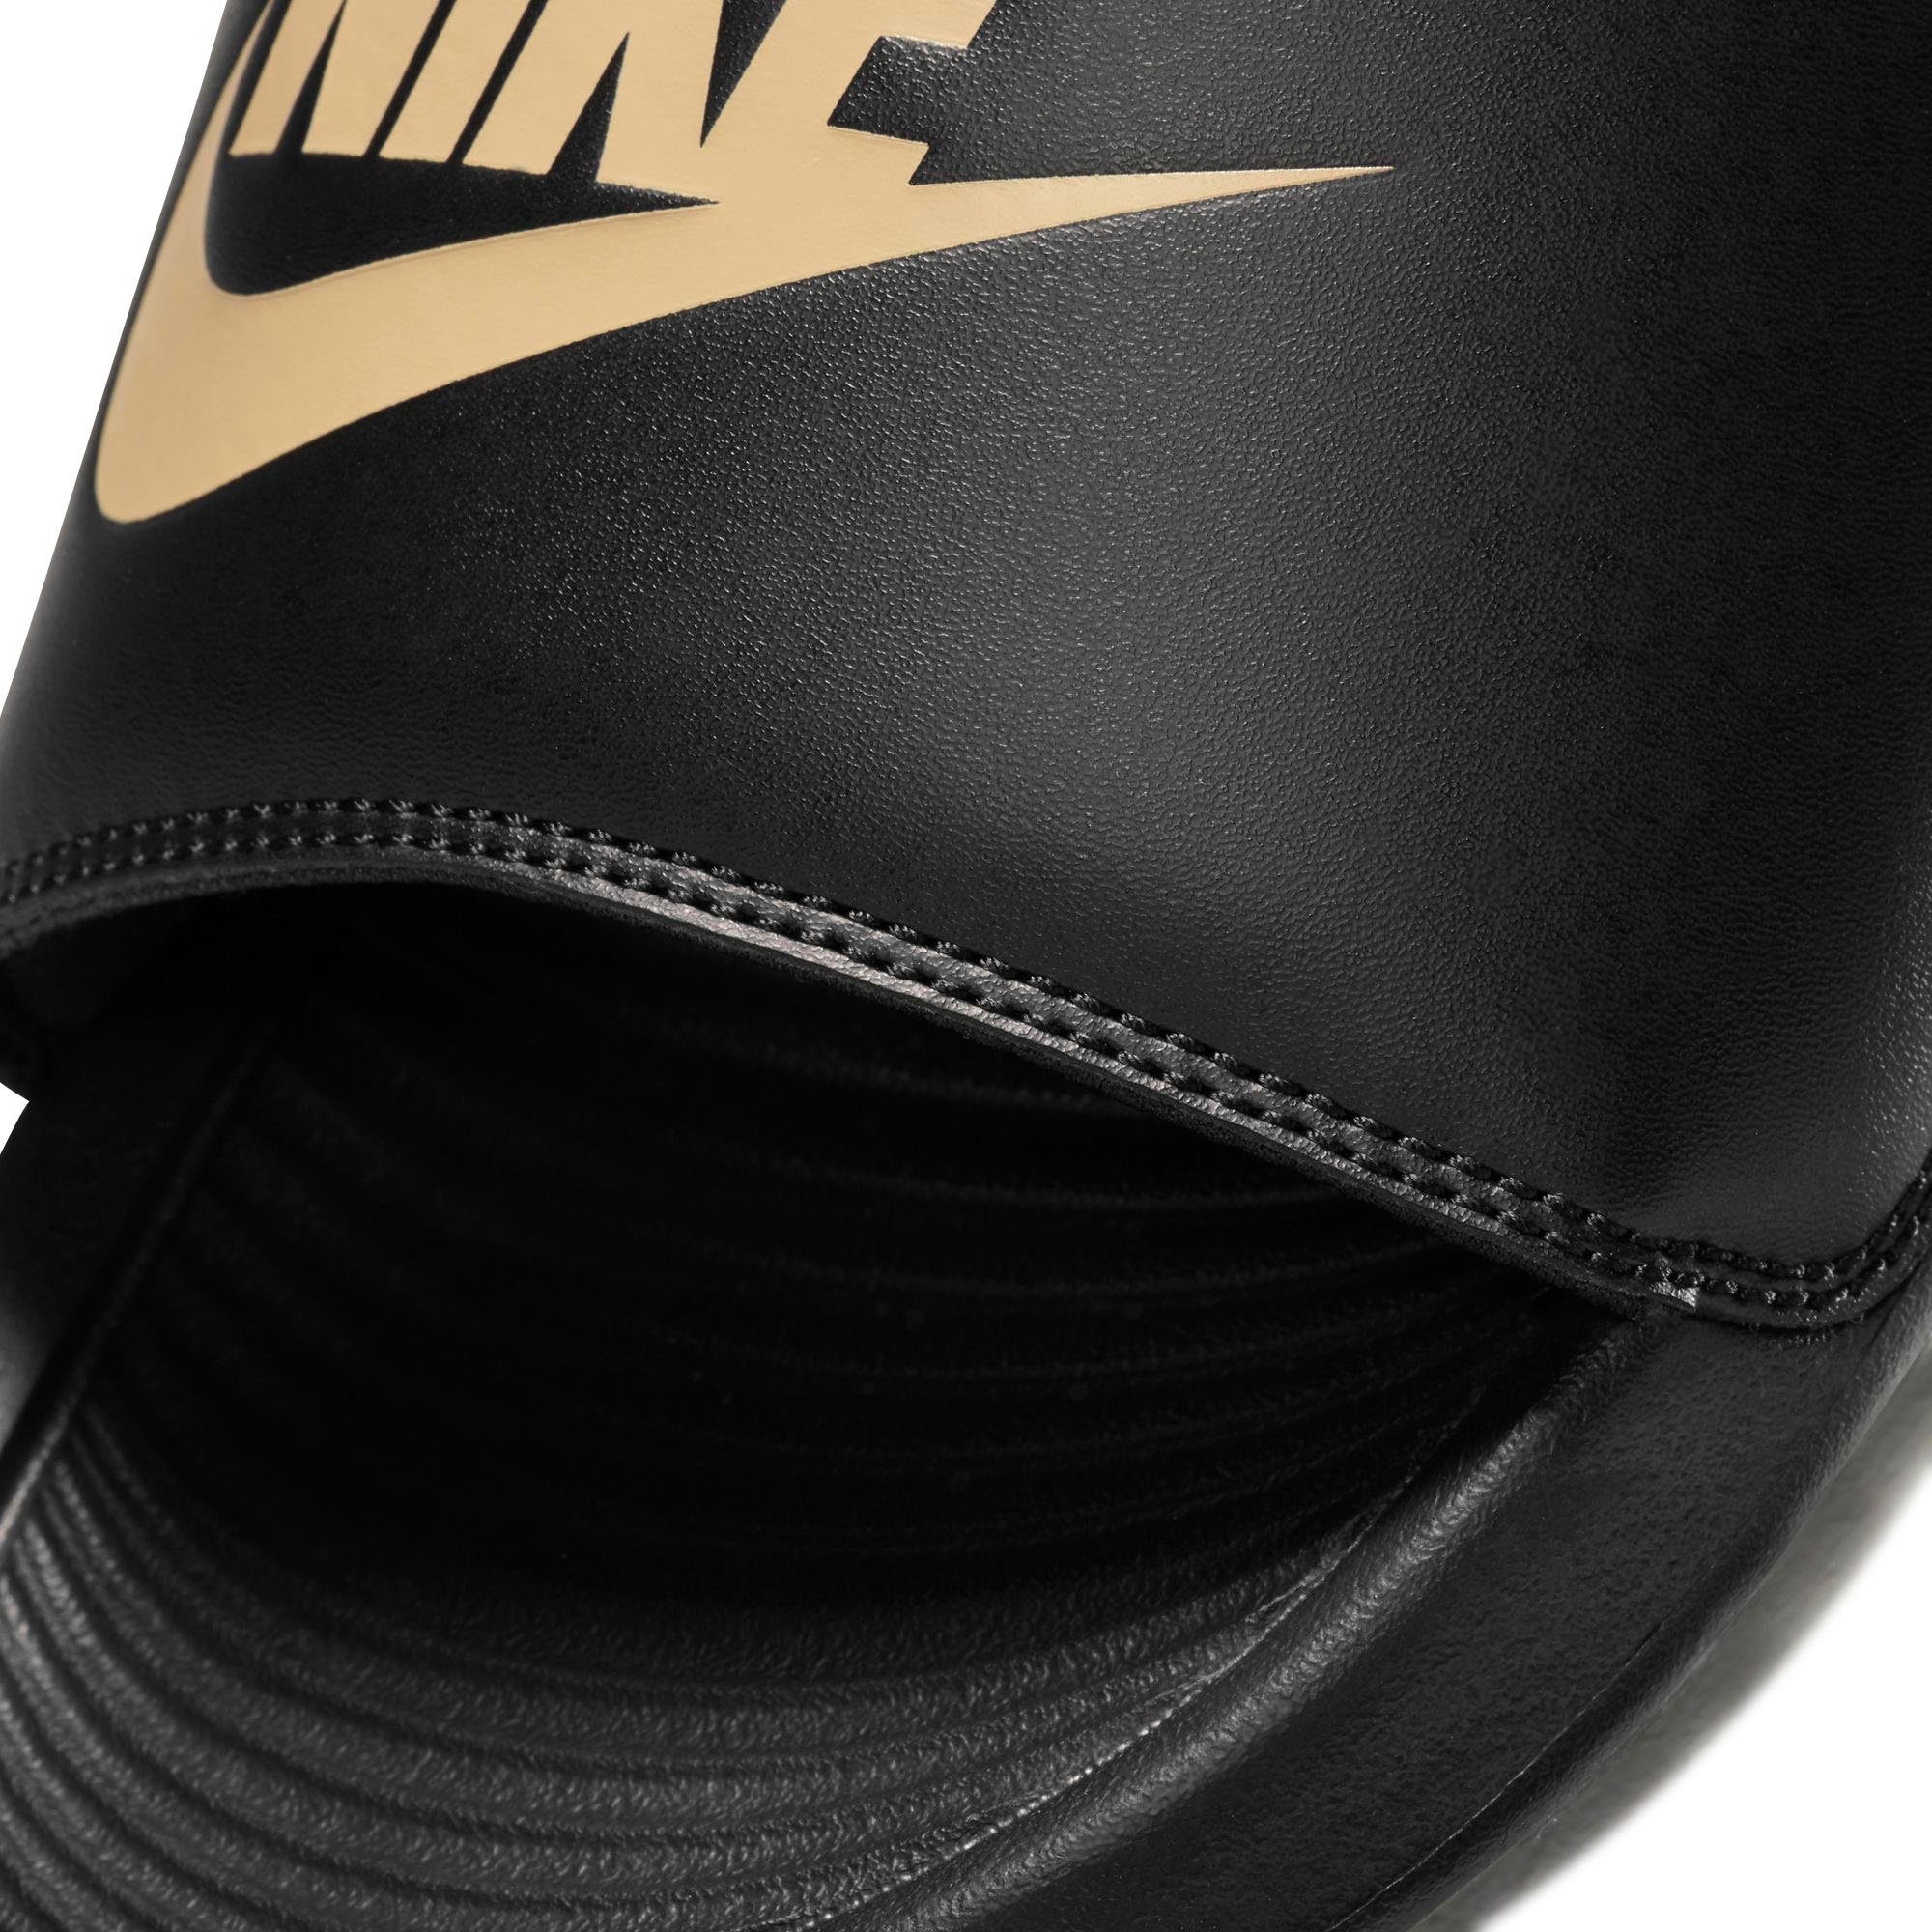 VICTORI Sportswear BLACK-METALLIC-GOLD-BLACK Nike ONE Badesandale